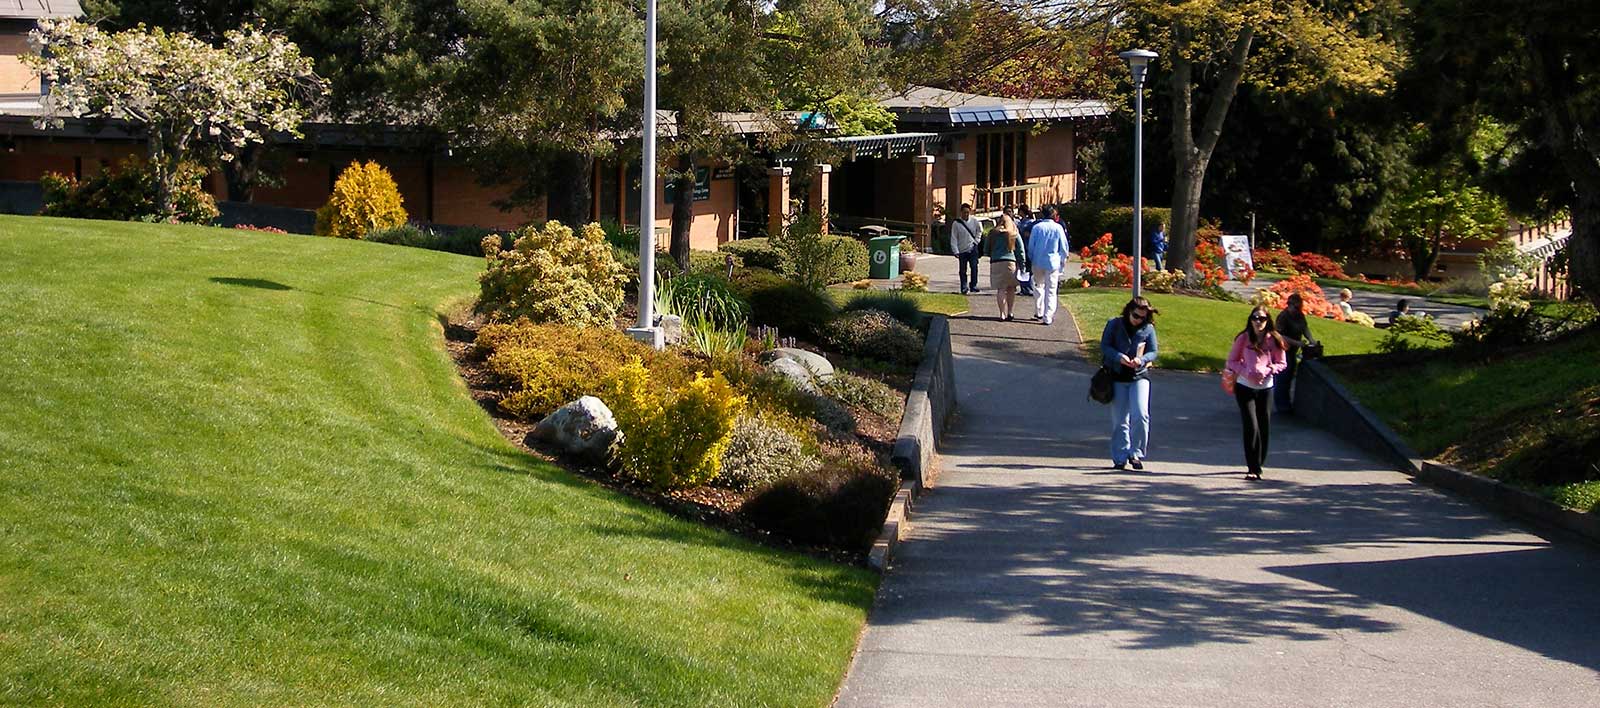 華盛頓州社區大學之一 Shoreline Community College